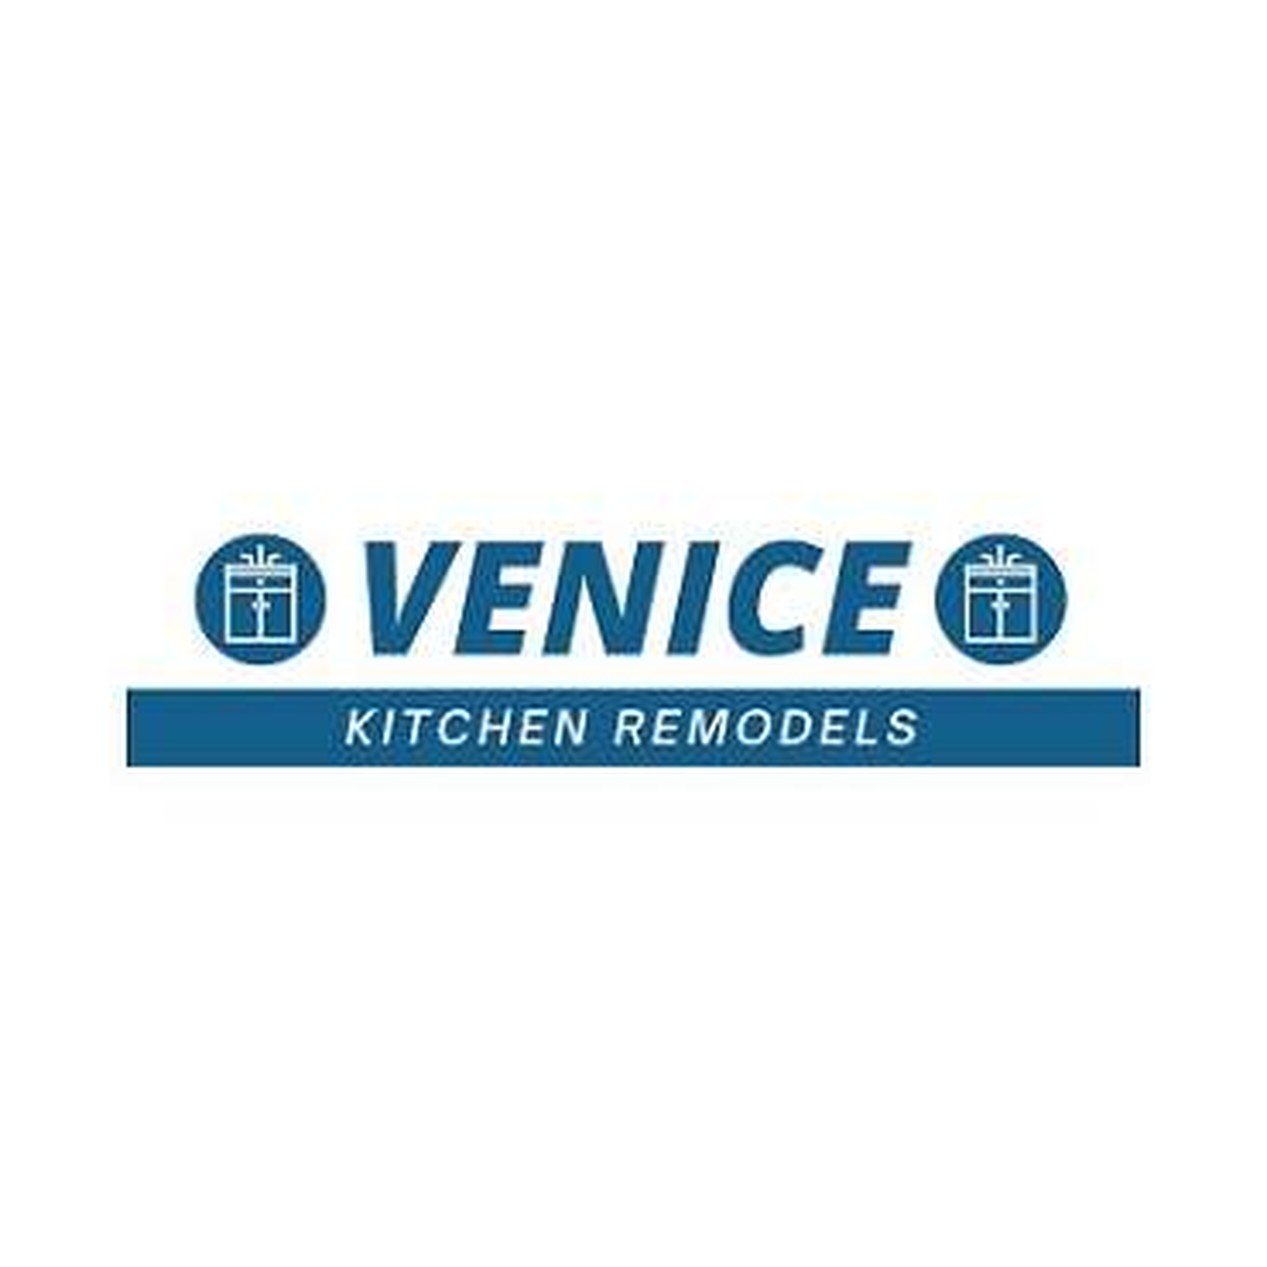 Venice Kitchen Remodels